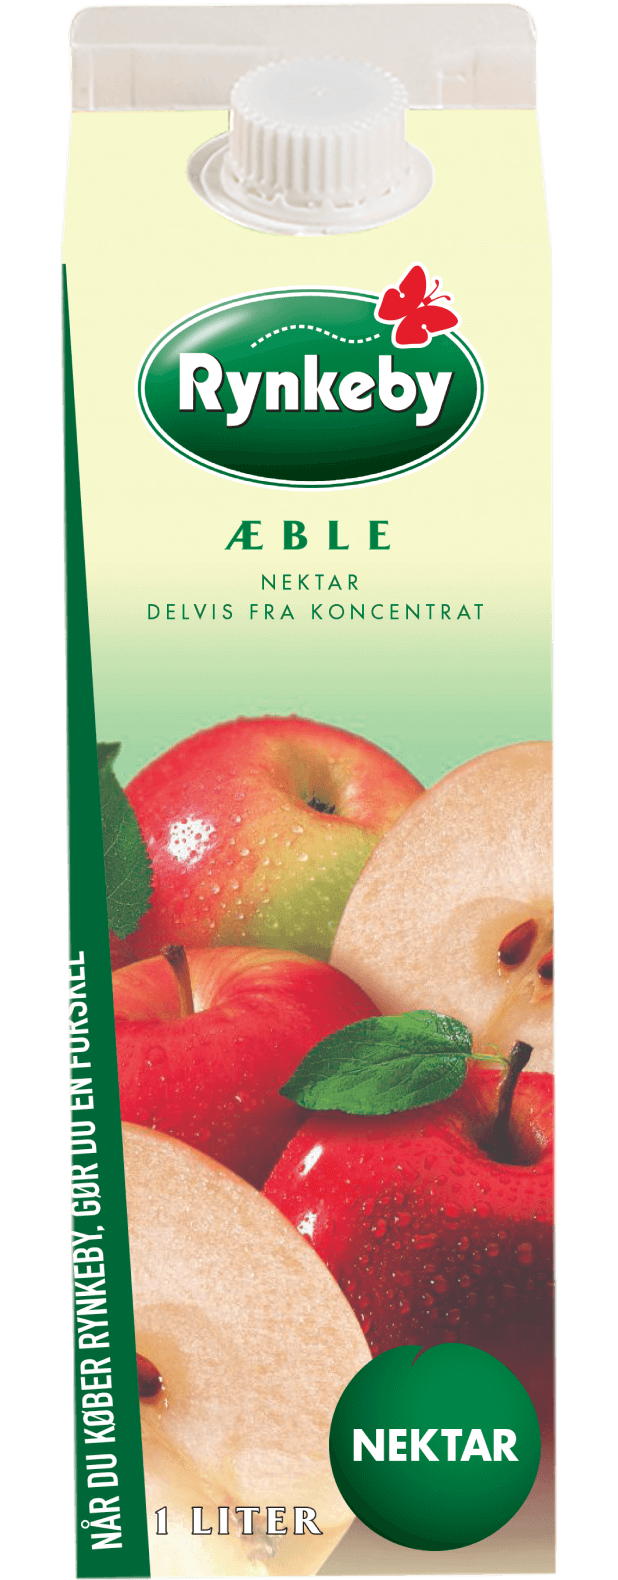 Klassisk Æblenektar